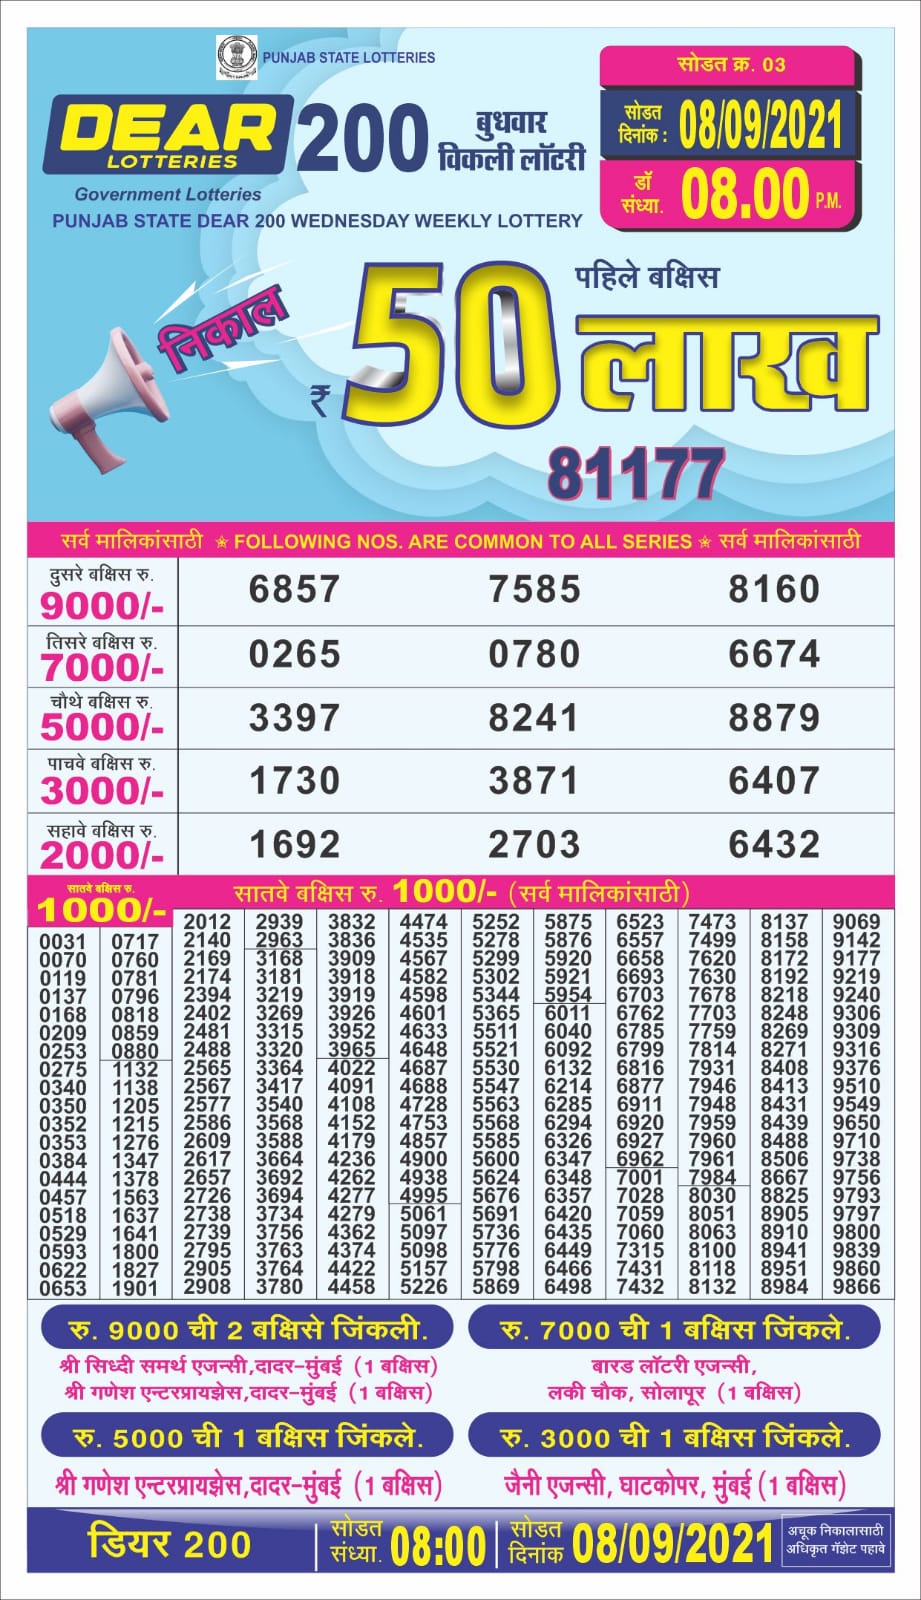 Dear 200 Weekly lottery result 08-09-2021